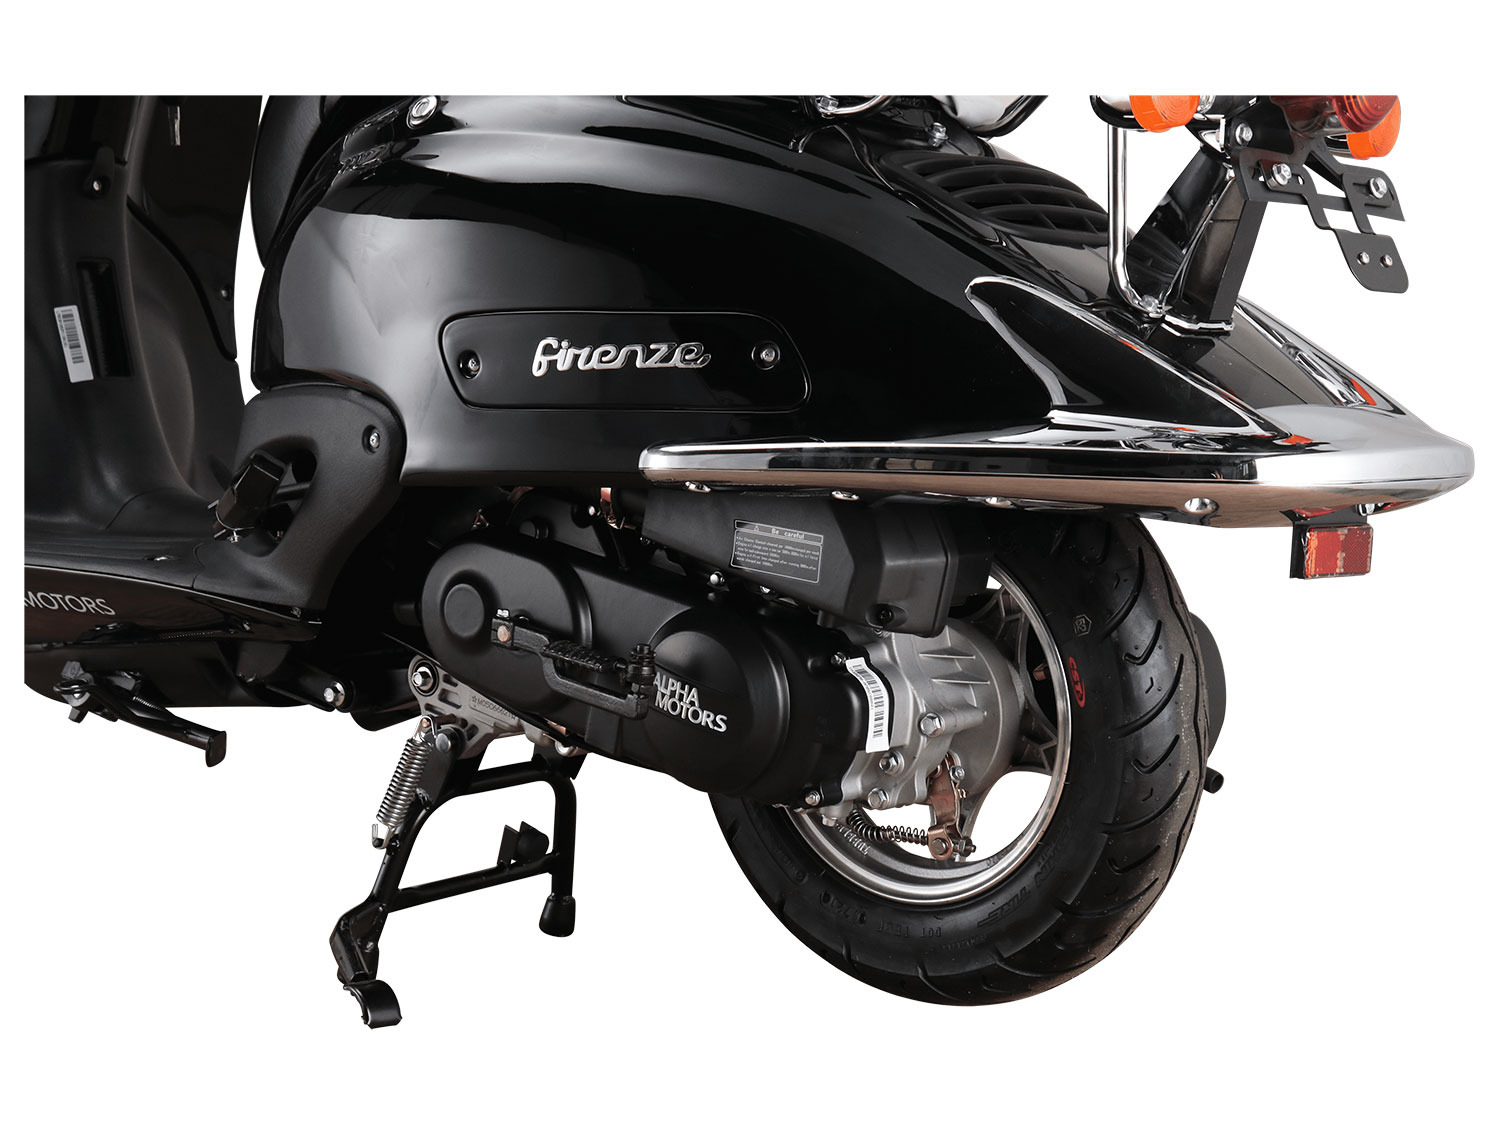 Alpha Motors Motorroller | EURO 125 ccm Firenze 5 LIDL